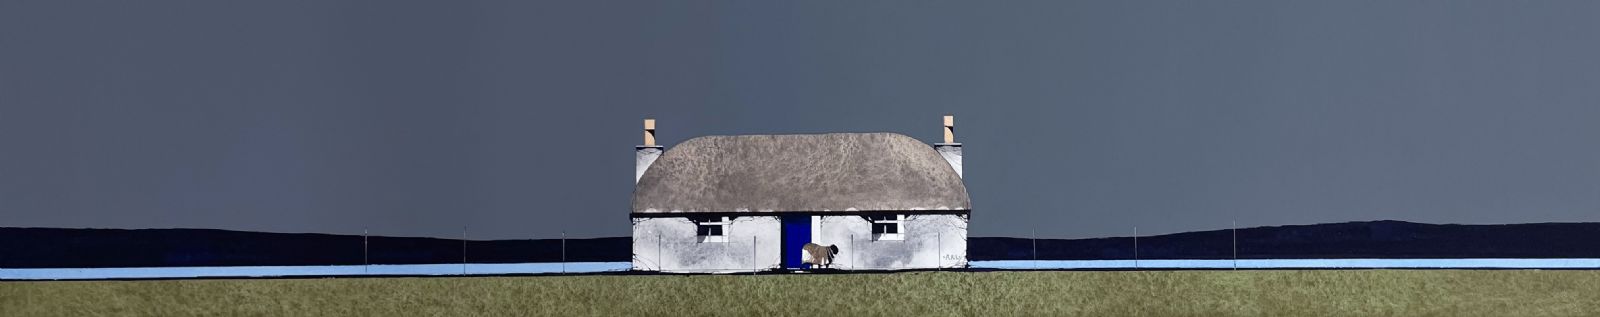 North Uist Croft House by Ron Lawson